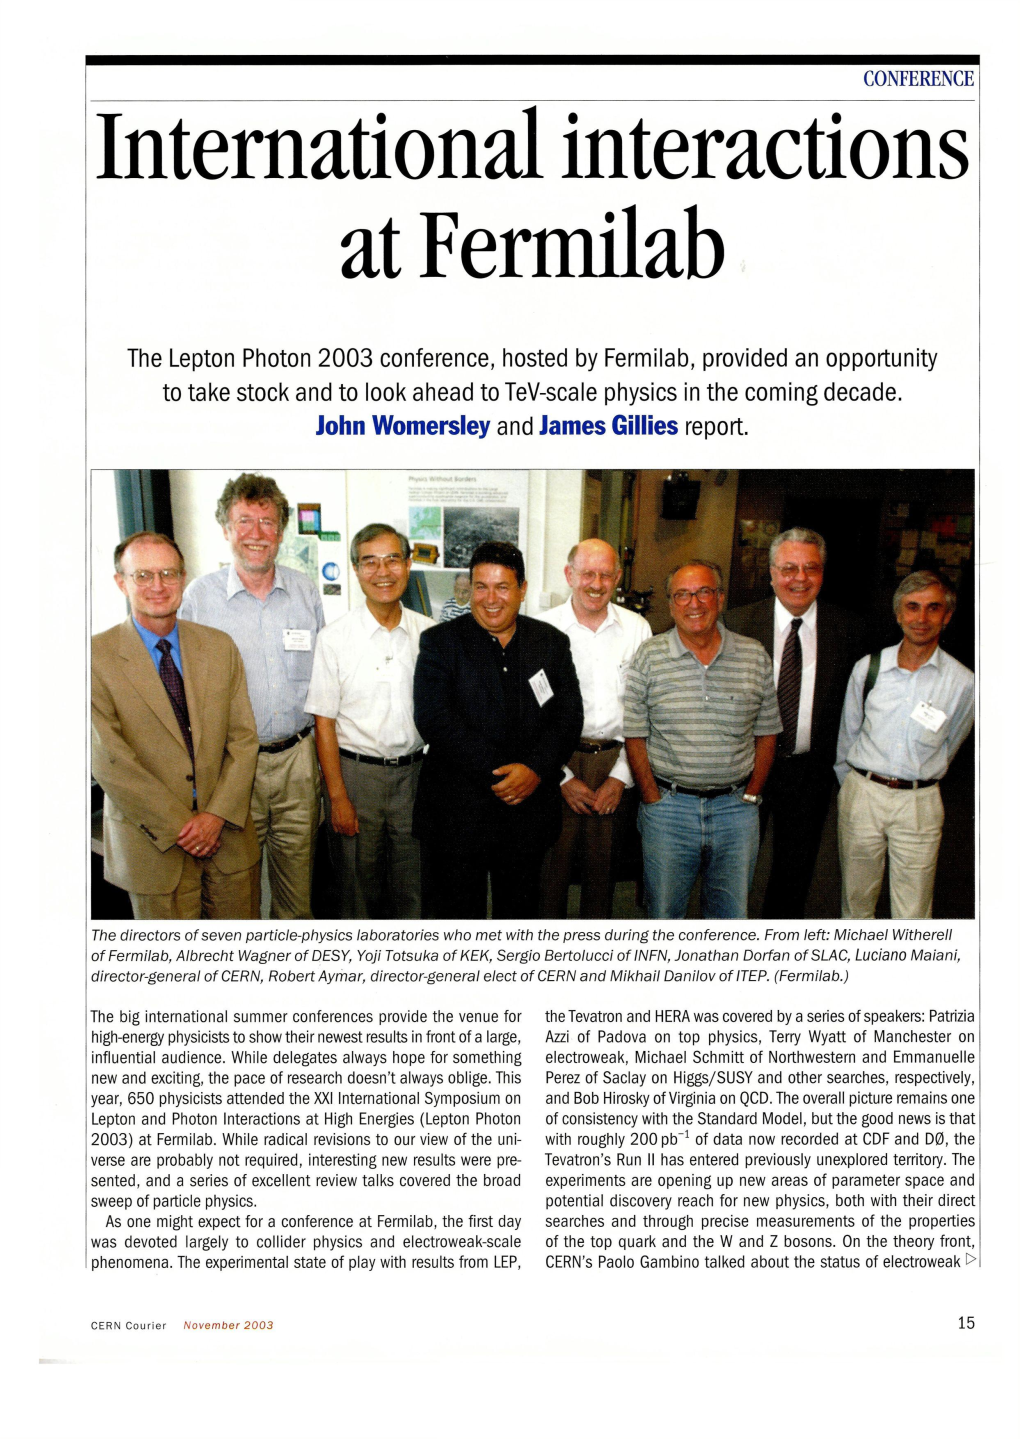 International Interactions at Fermilab